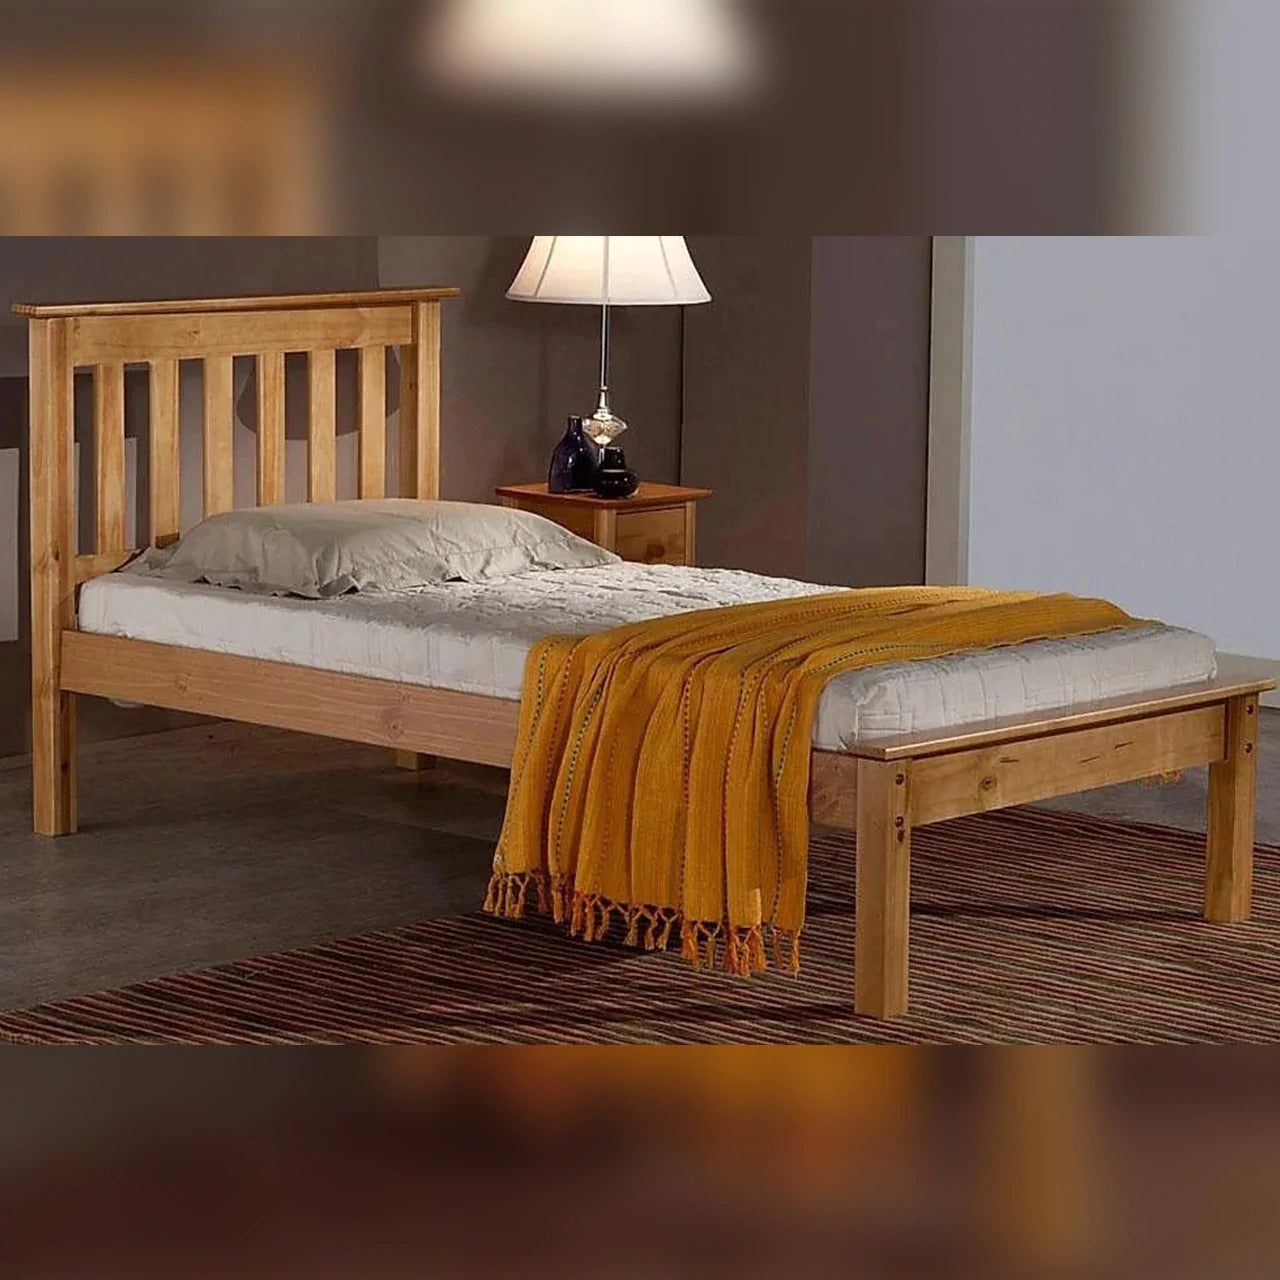 Wooden Bed Design, Wooden Box Khat Design, Unique Wooden Bed Design